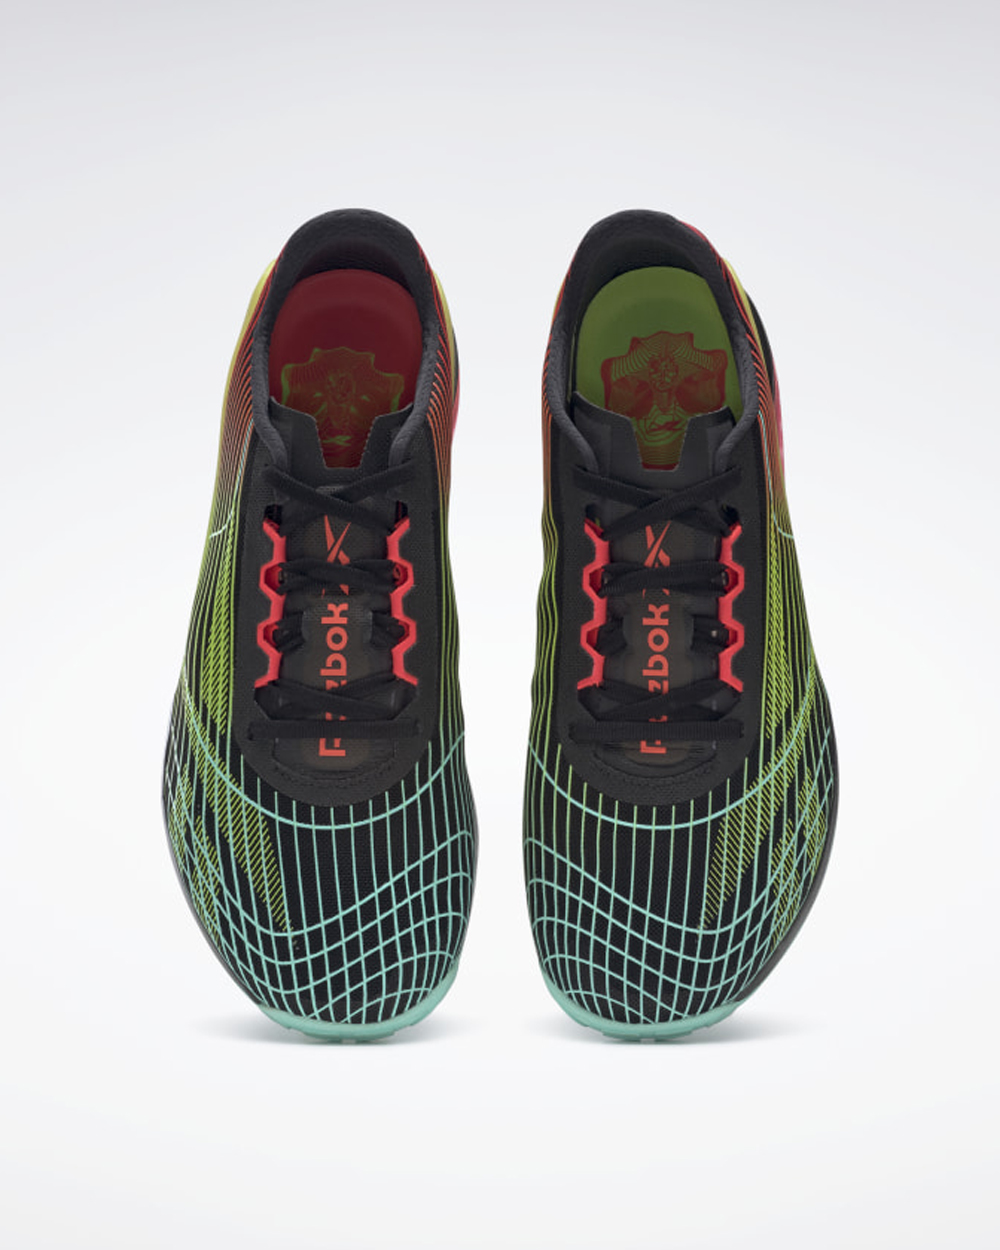 REEBOK Nano X1 Pursuit 3d printed shoes